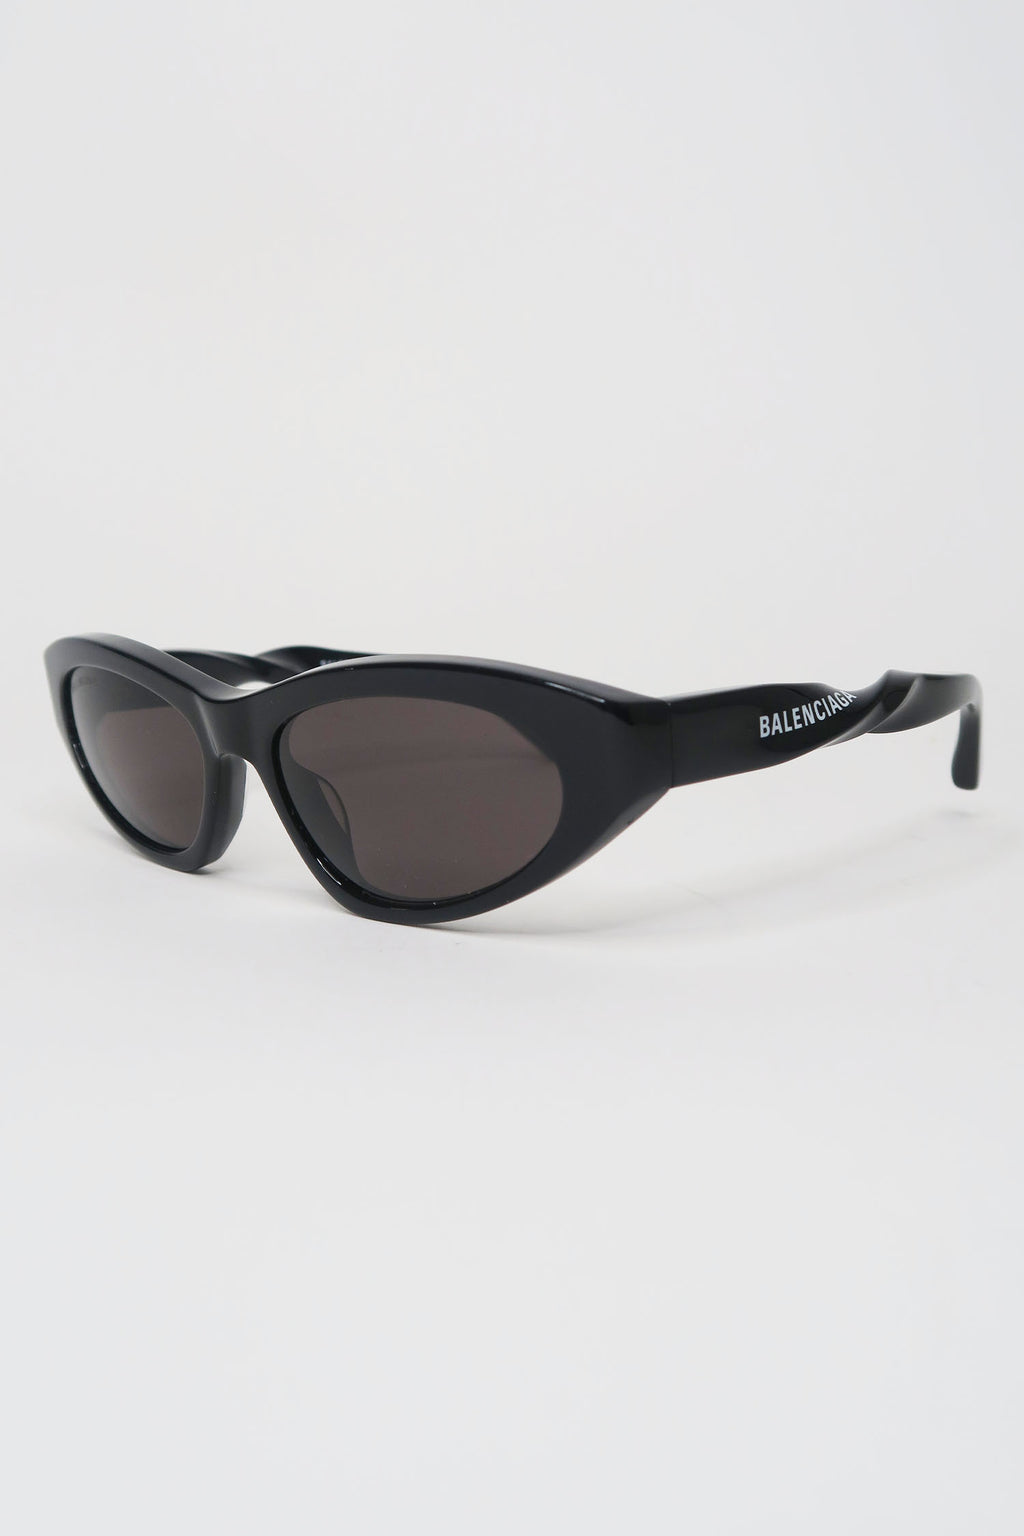 Balenciaga Narrow Tinted Sunglasses